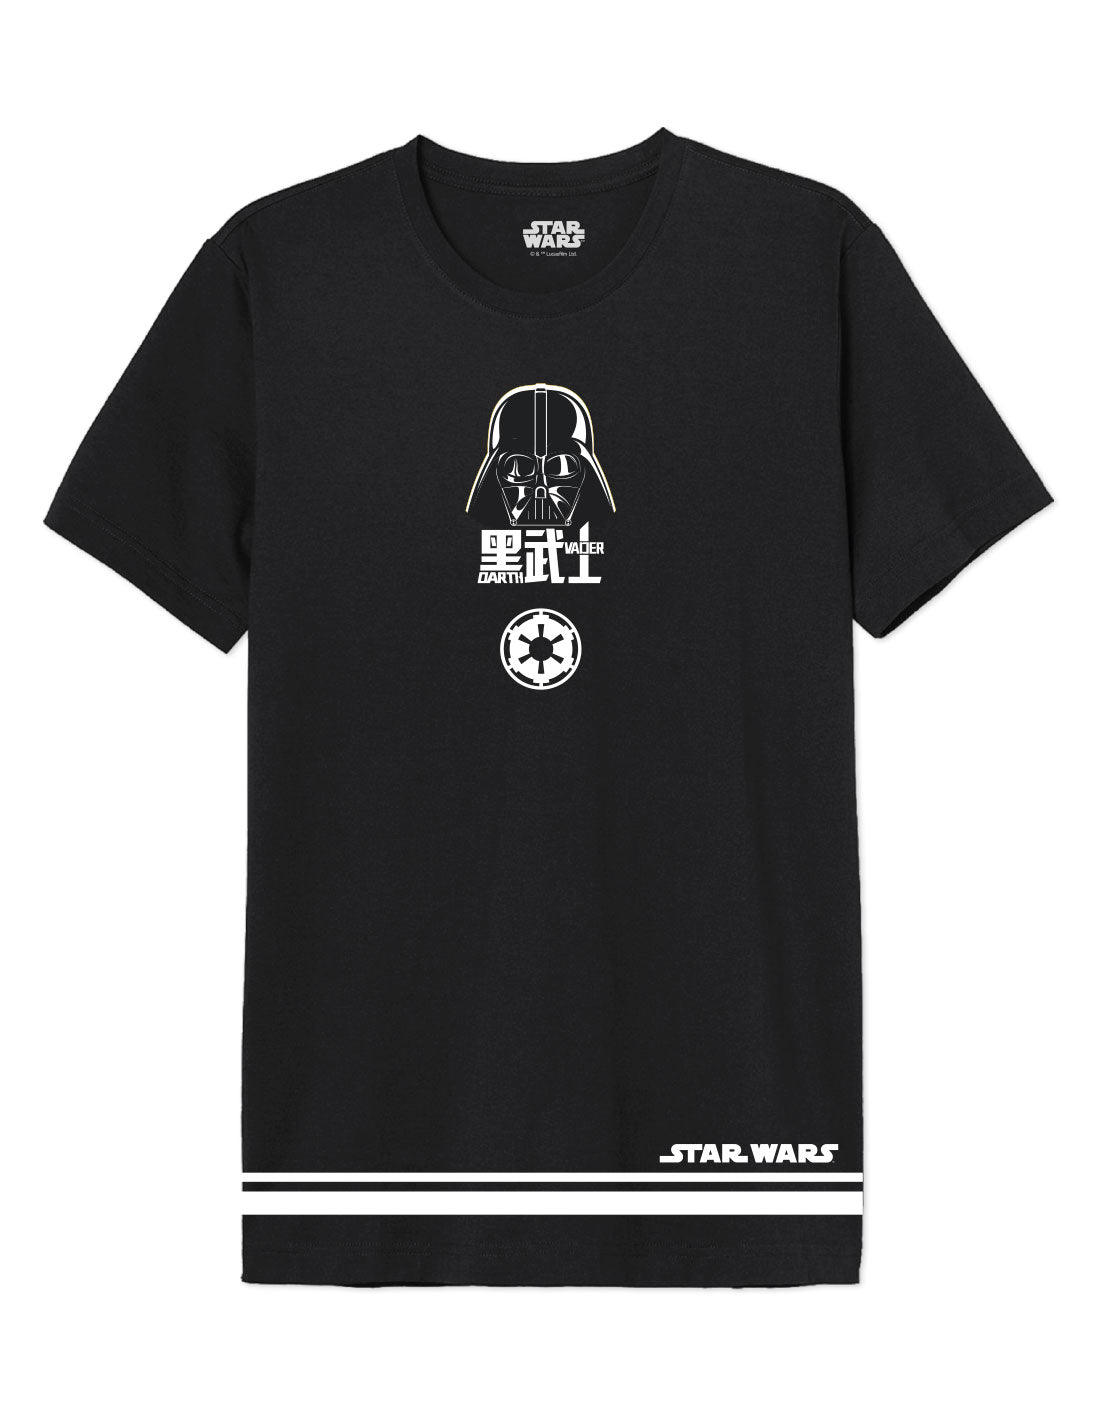 Star Wars Oversized Tee - Join The Dark Side